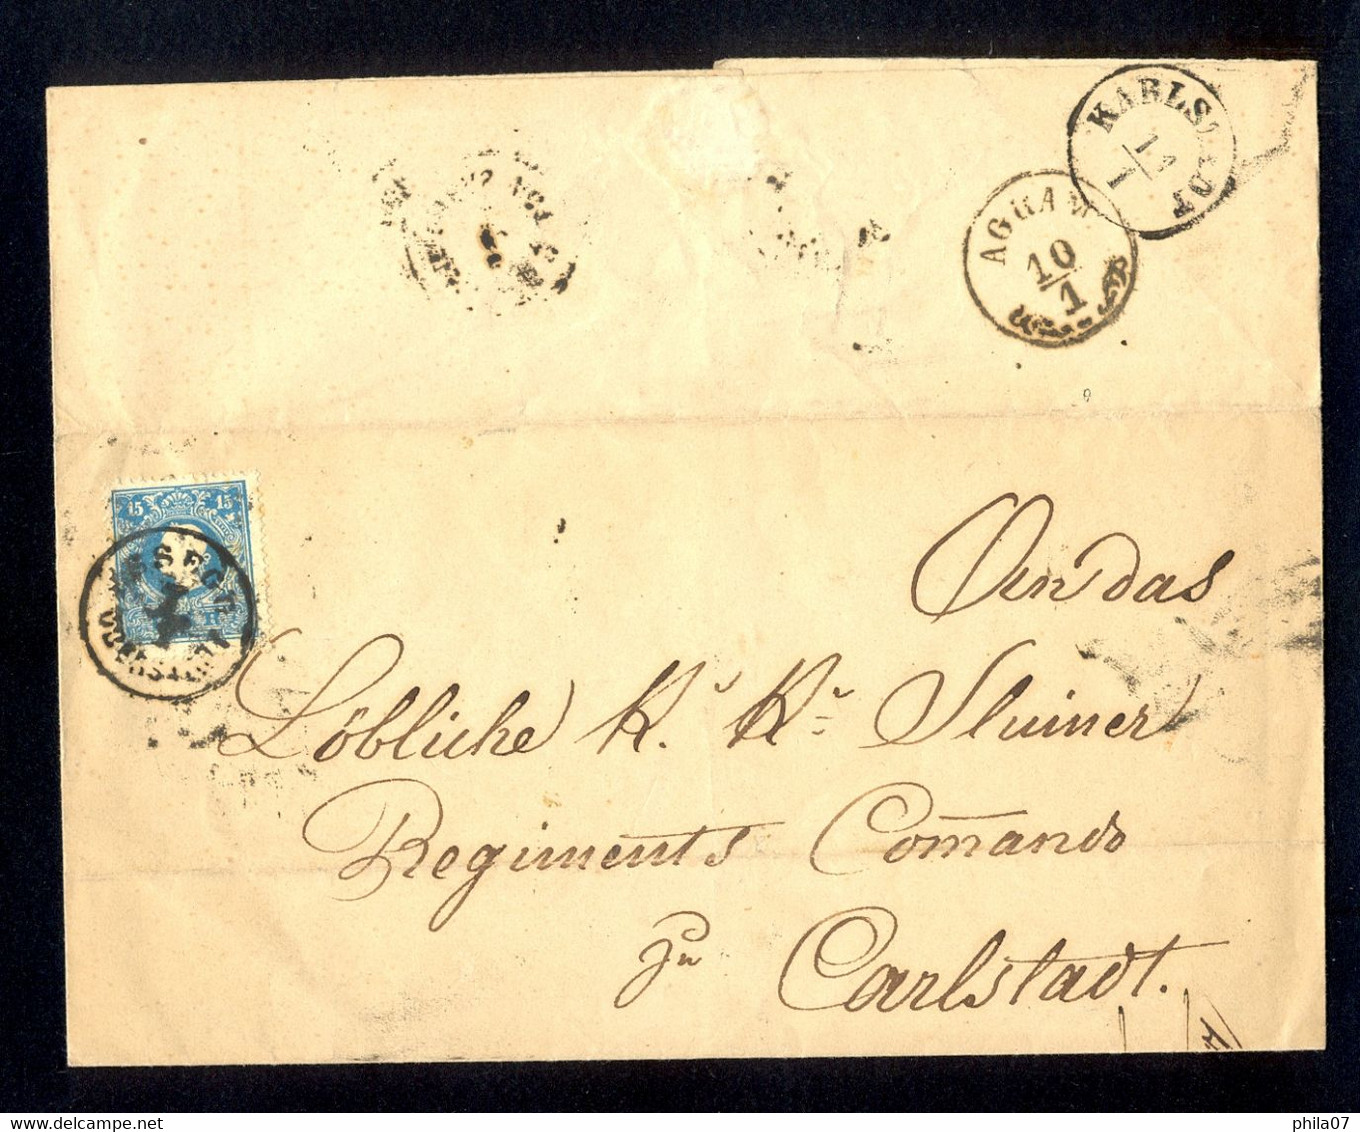 HUNGARY, CROATIA - Cover Of Letter Sent From ESSEG (Osijek) To CARLSTADT (Karlovac) Via AGRAM (Zagreb) 1862. - ...-1867 Préphilatélie